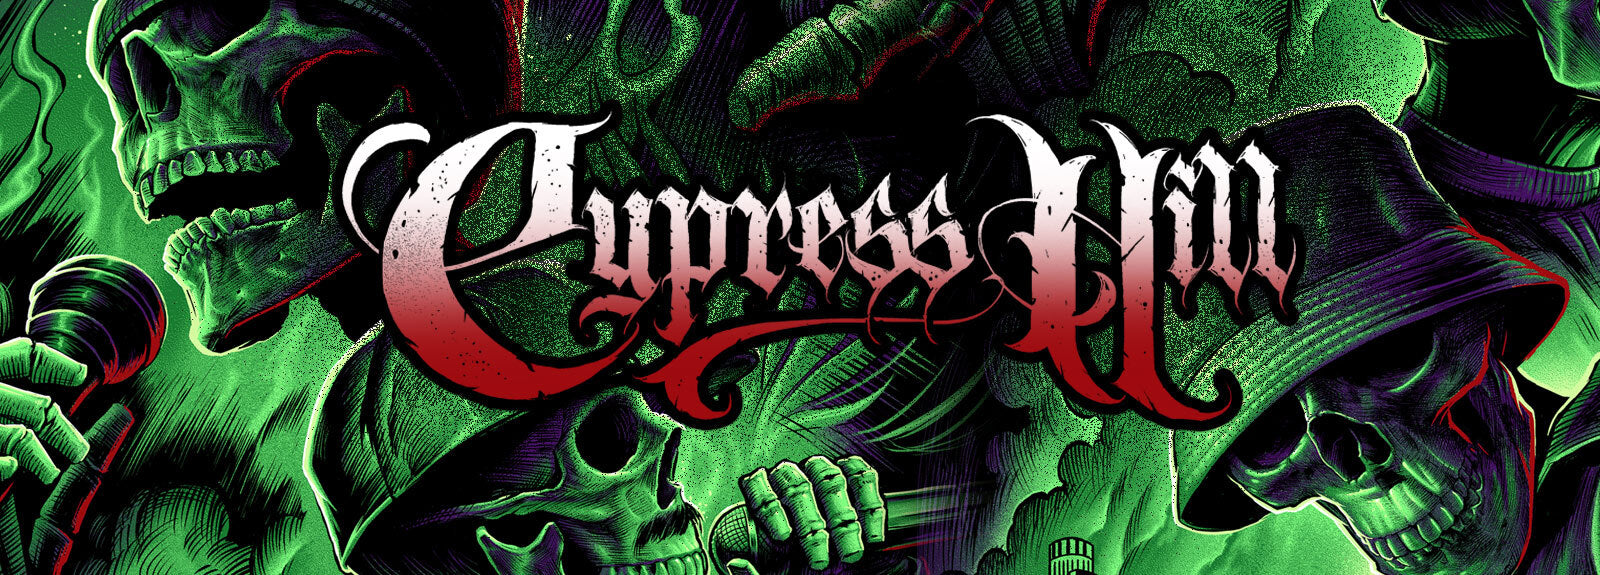 Cypress Hill "Insane In The Brain"